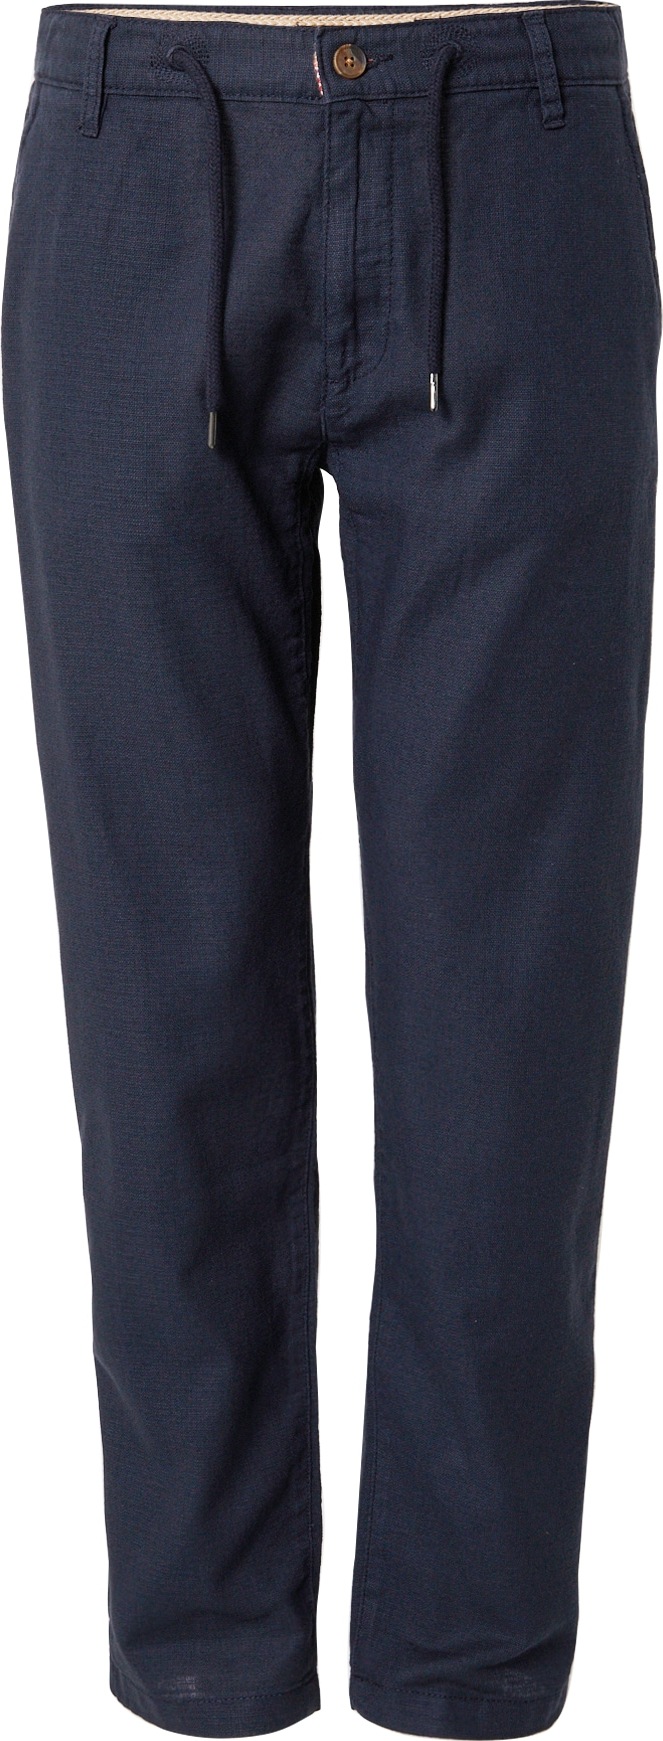 INDICODE JEANS Chino kalhoty 'Clio' námořnická modř